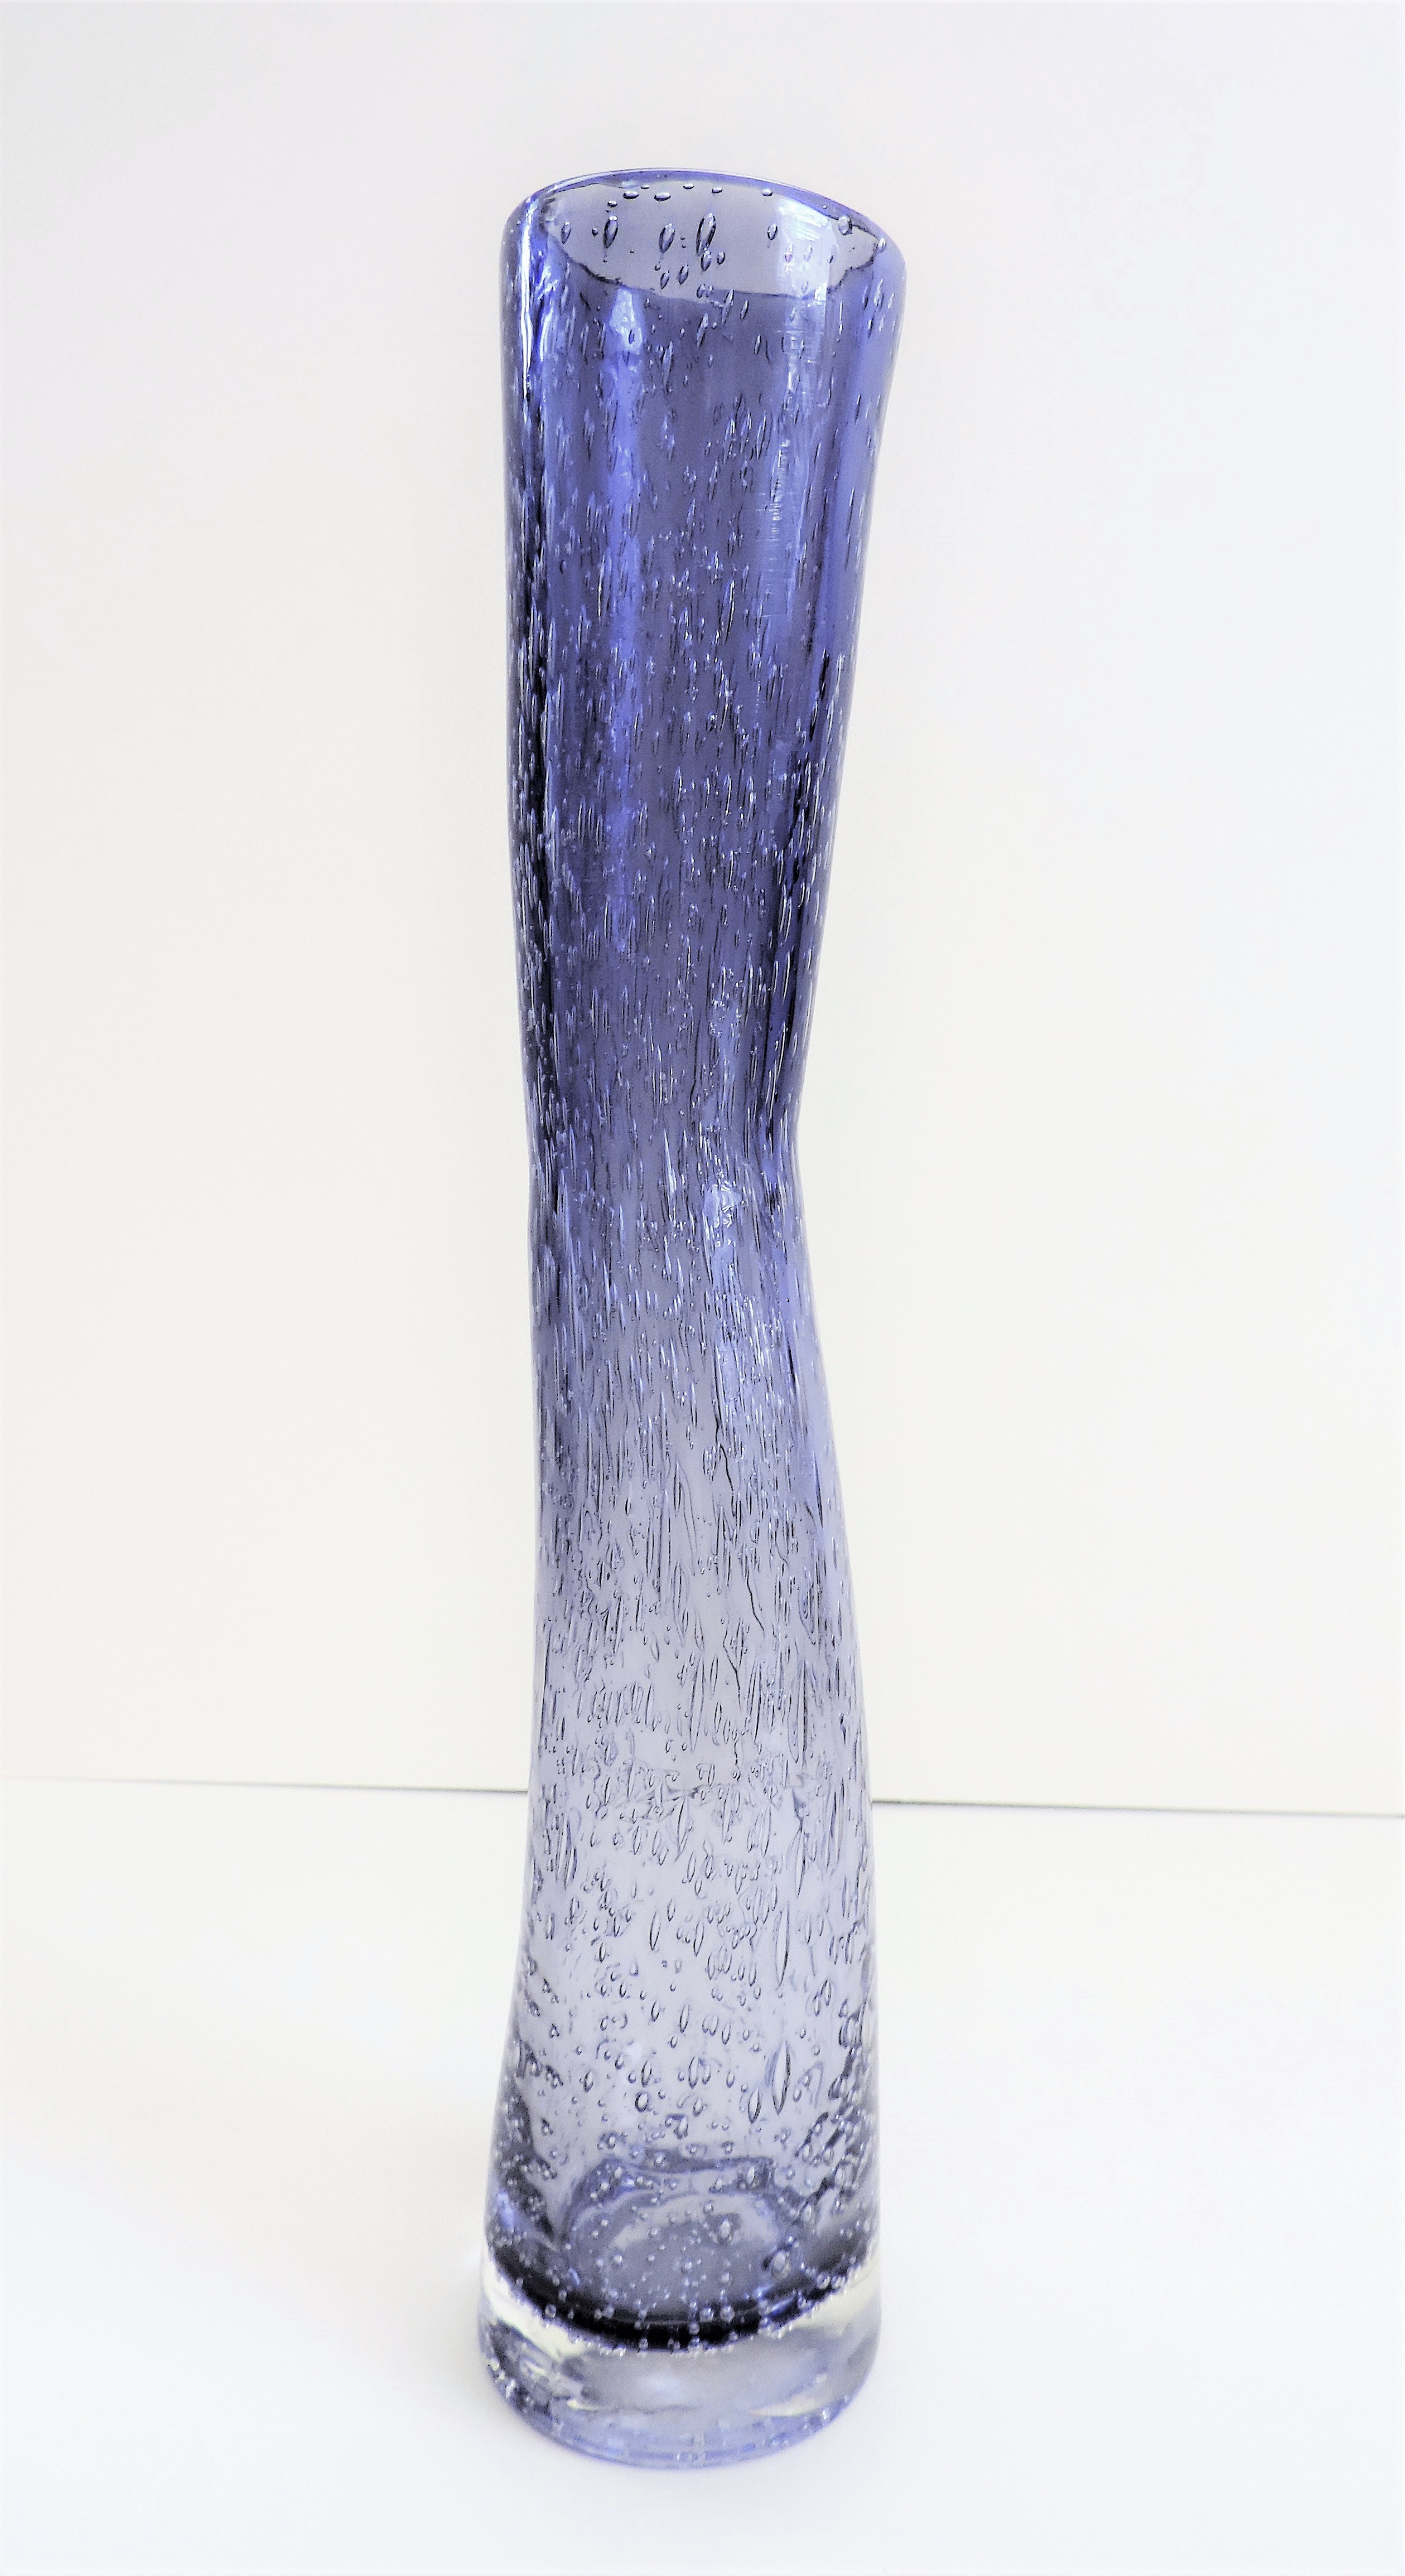 Organic Art Glass Vase 29cm tall - Image 2 of 5